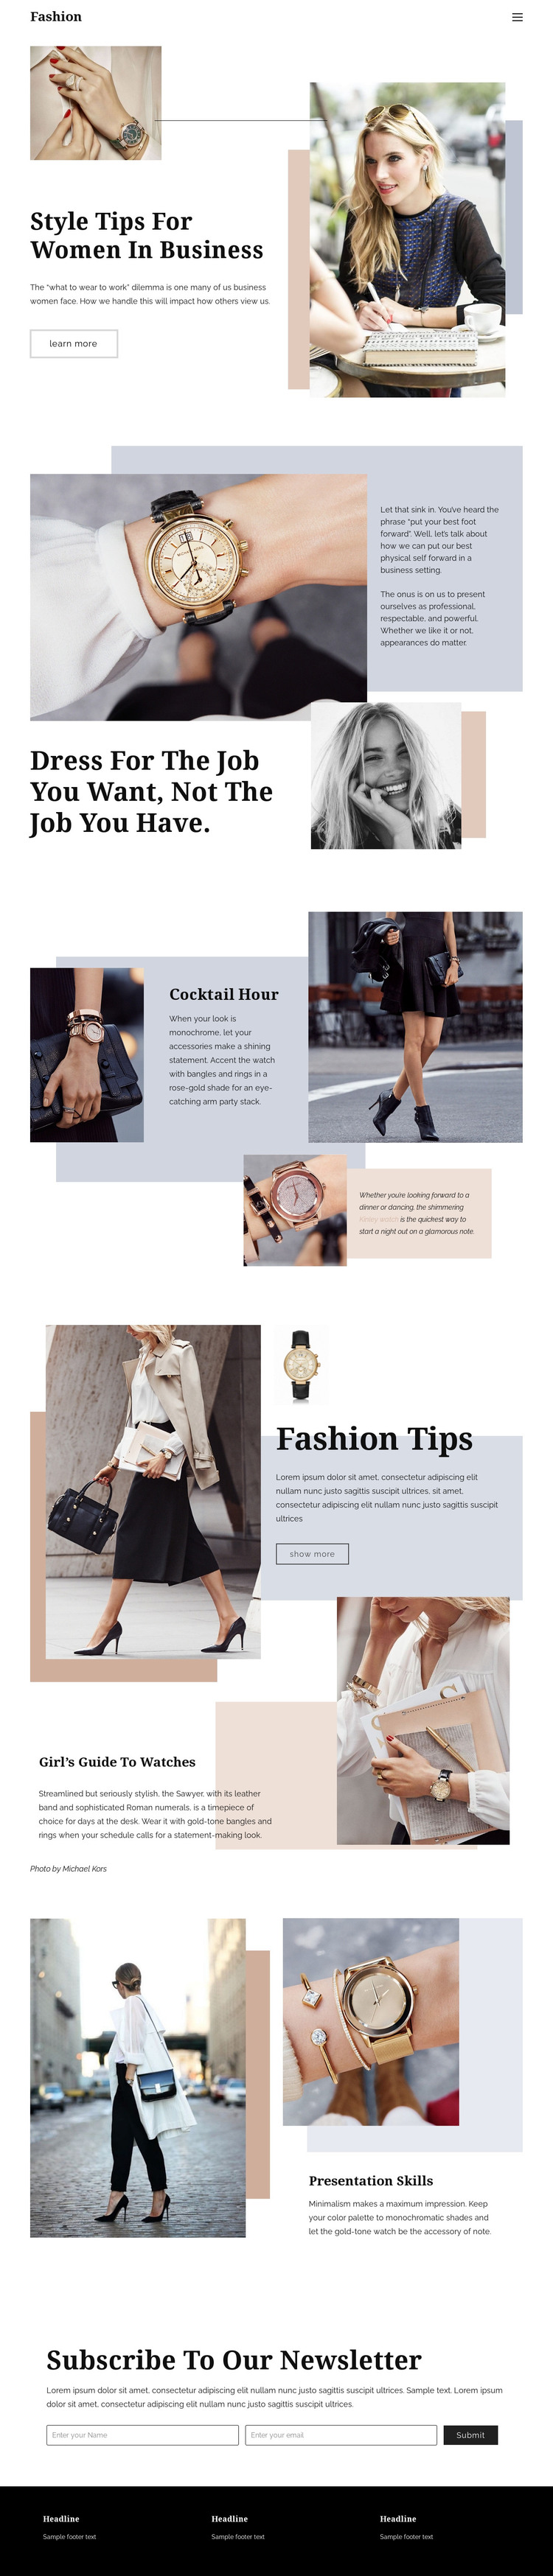 Fashion tips Web Design